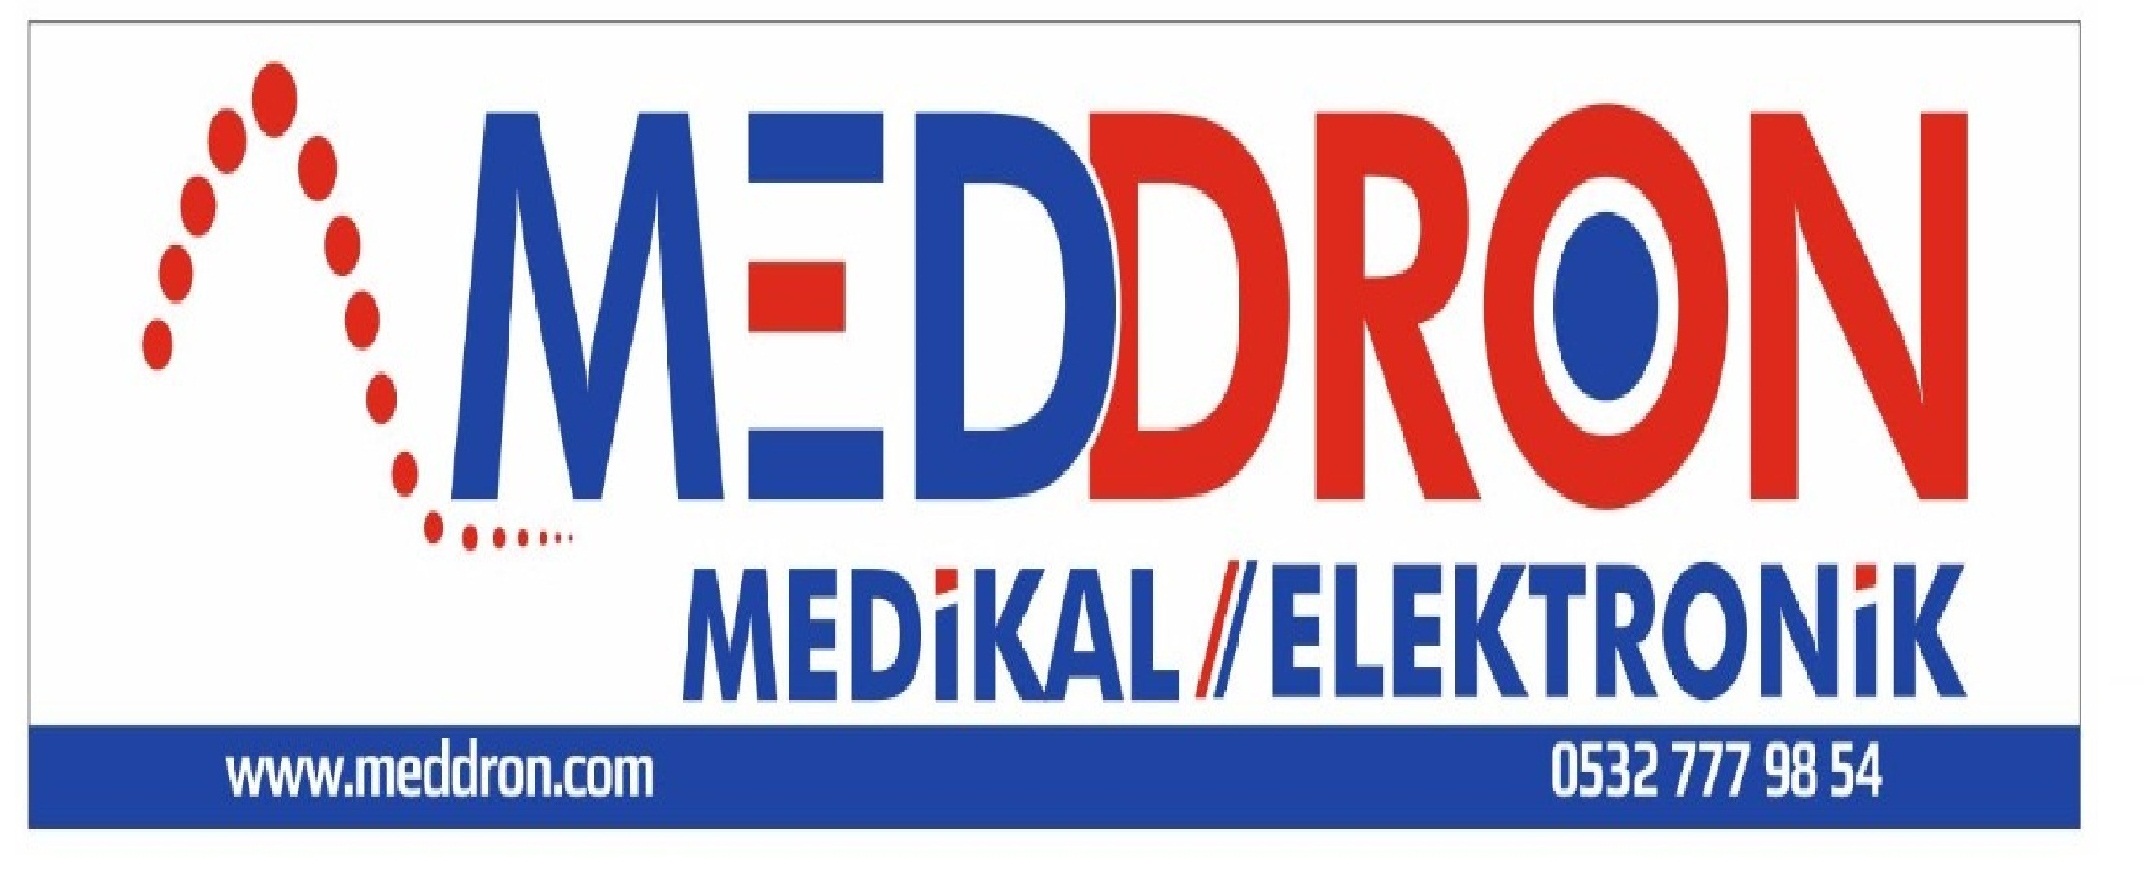 http://www.meddron.com Logo